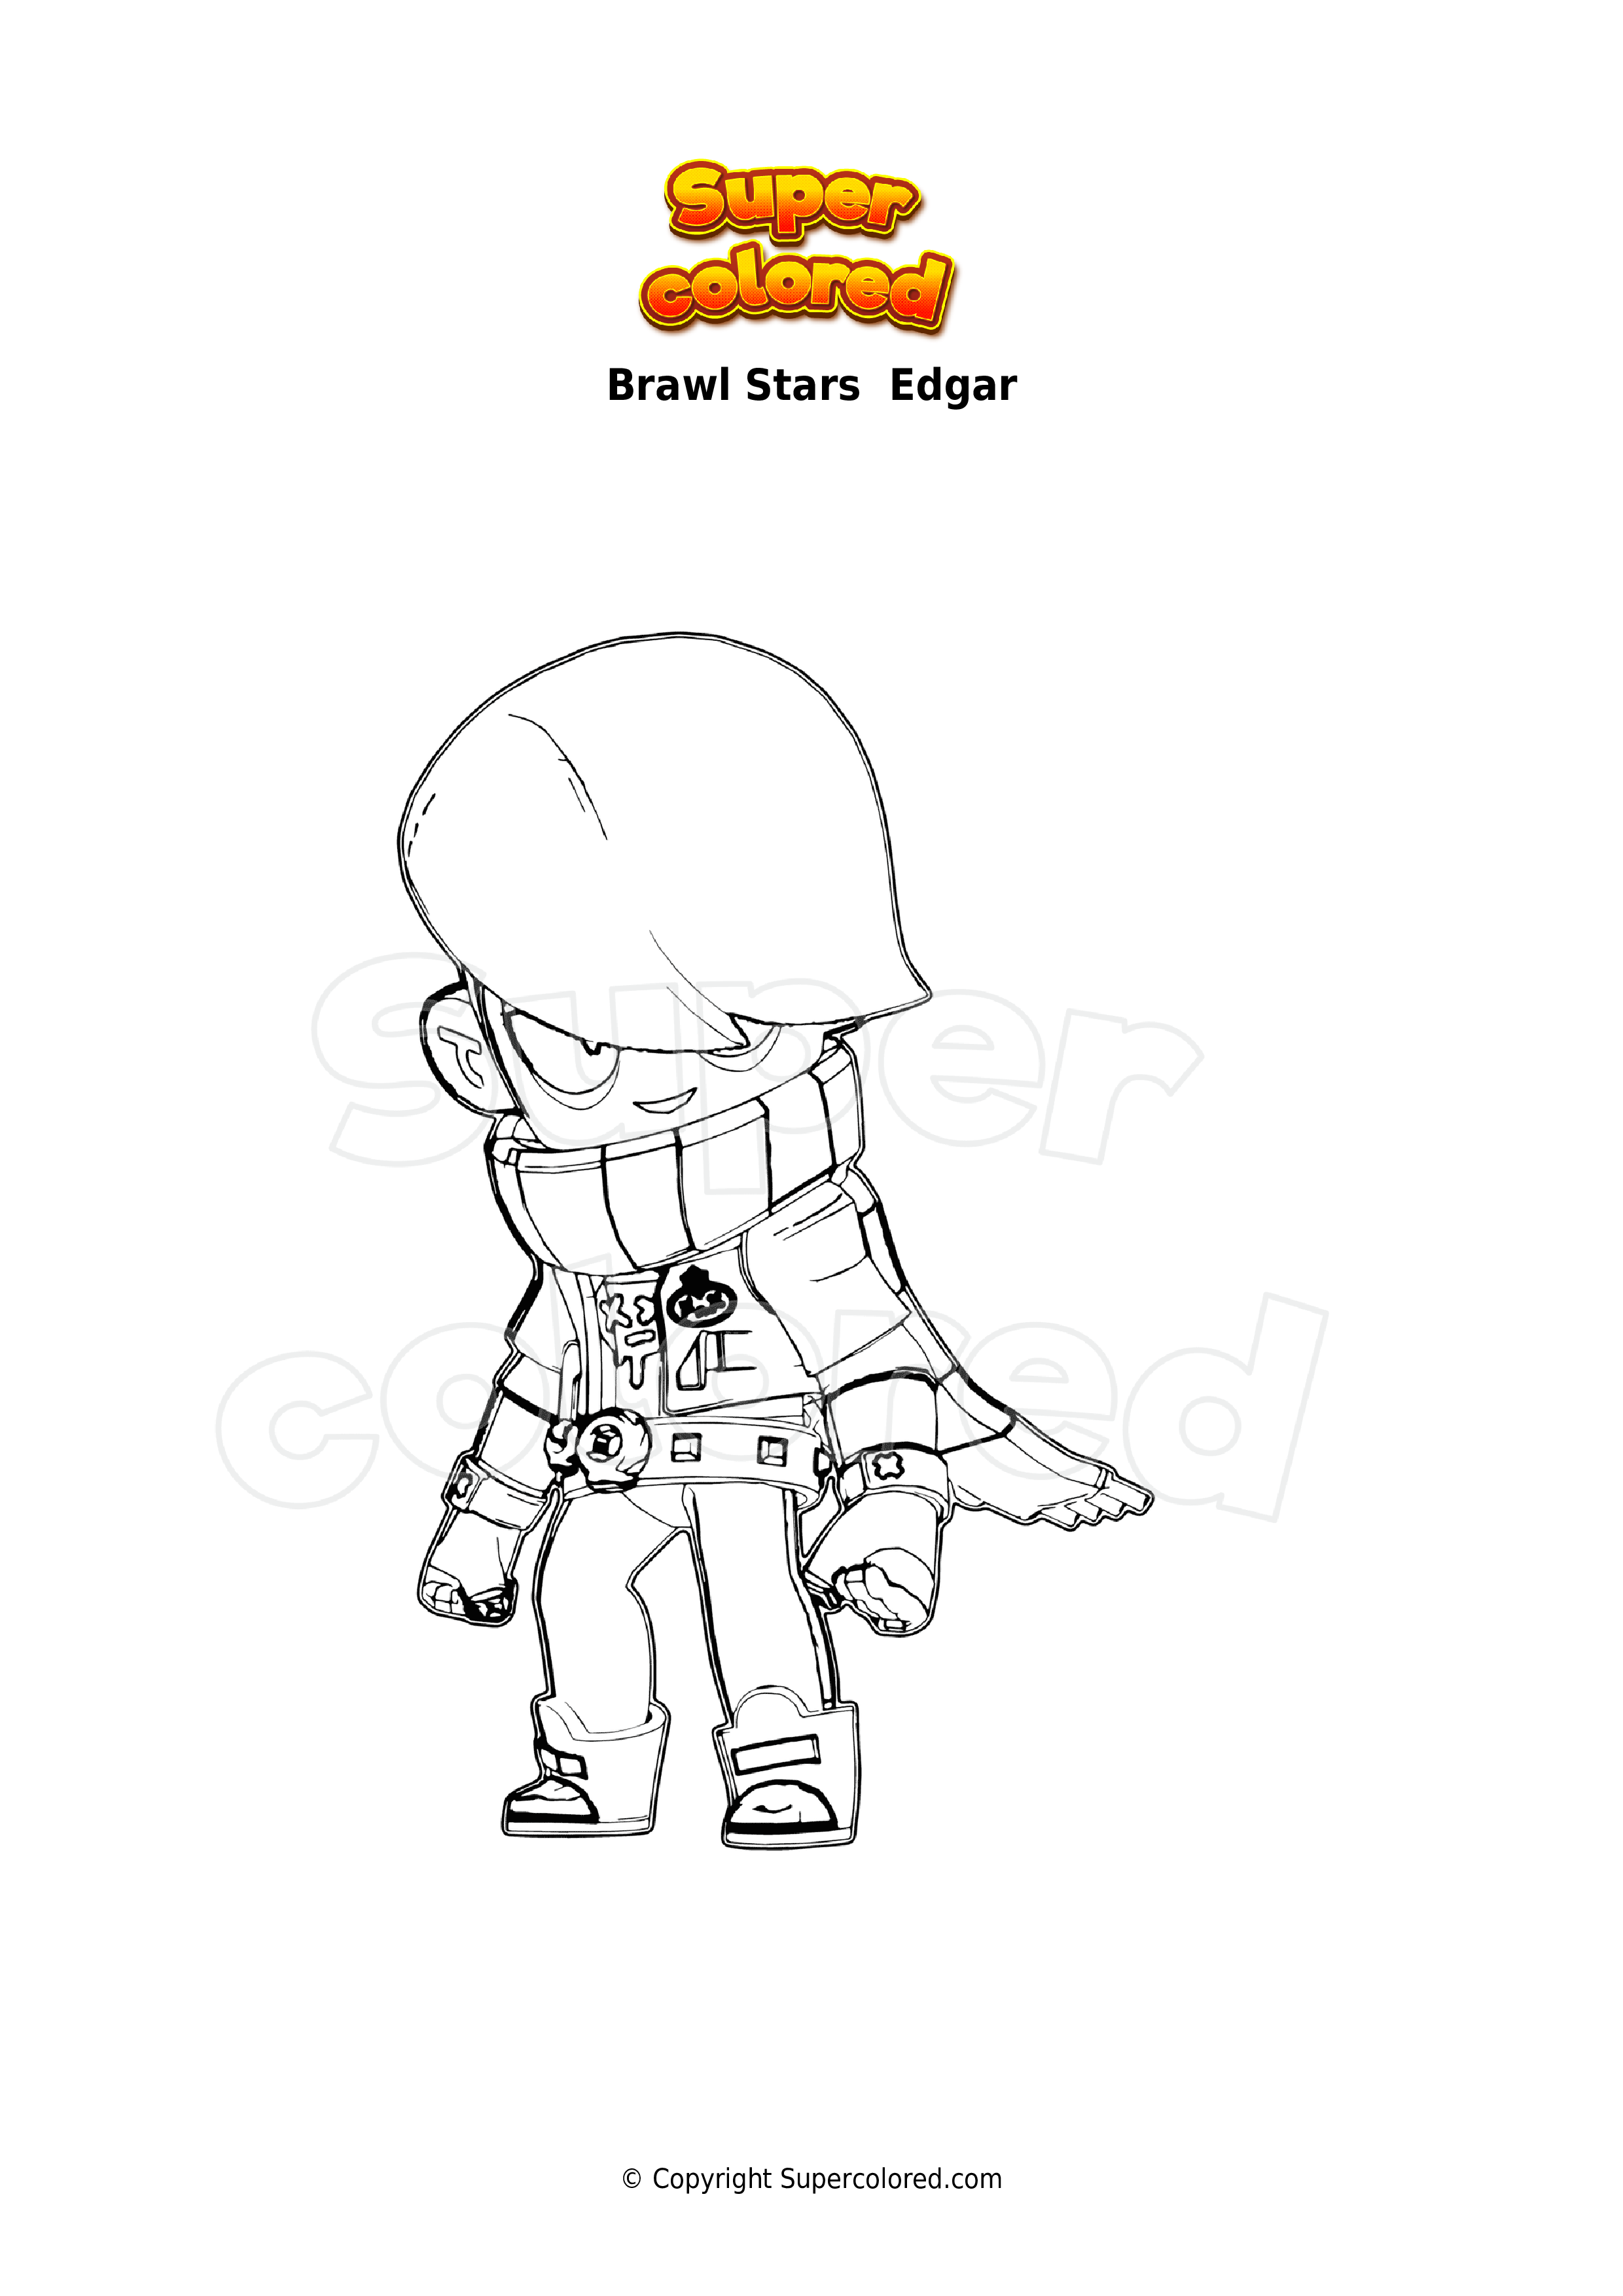 Dibujo Para Colorear Brawl Stars Edgar Supercolored Com - edgar do brawl stars para colorir